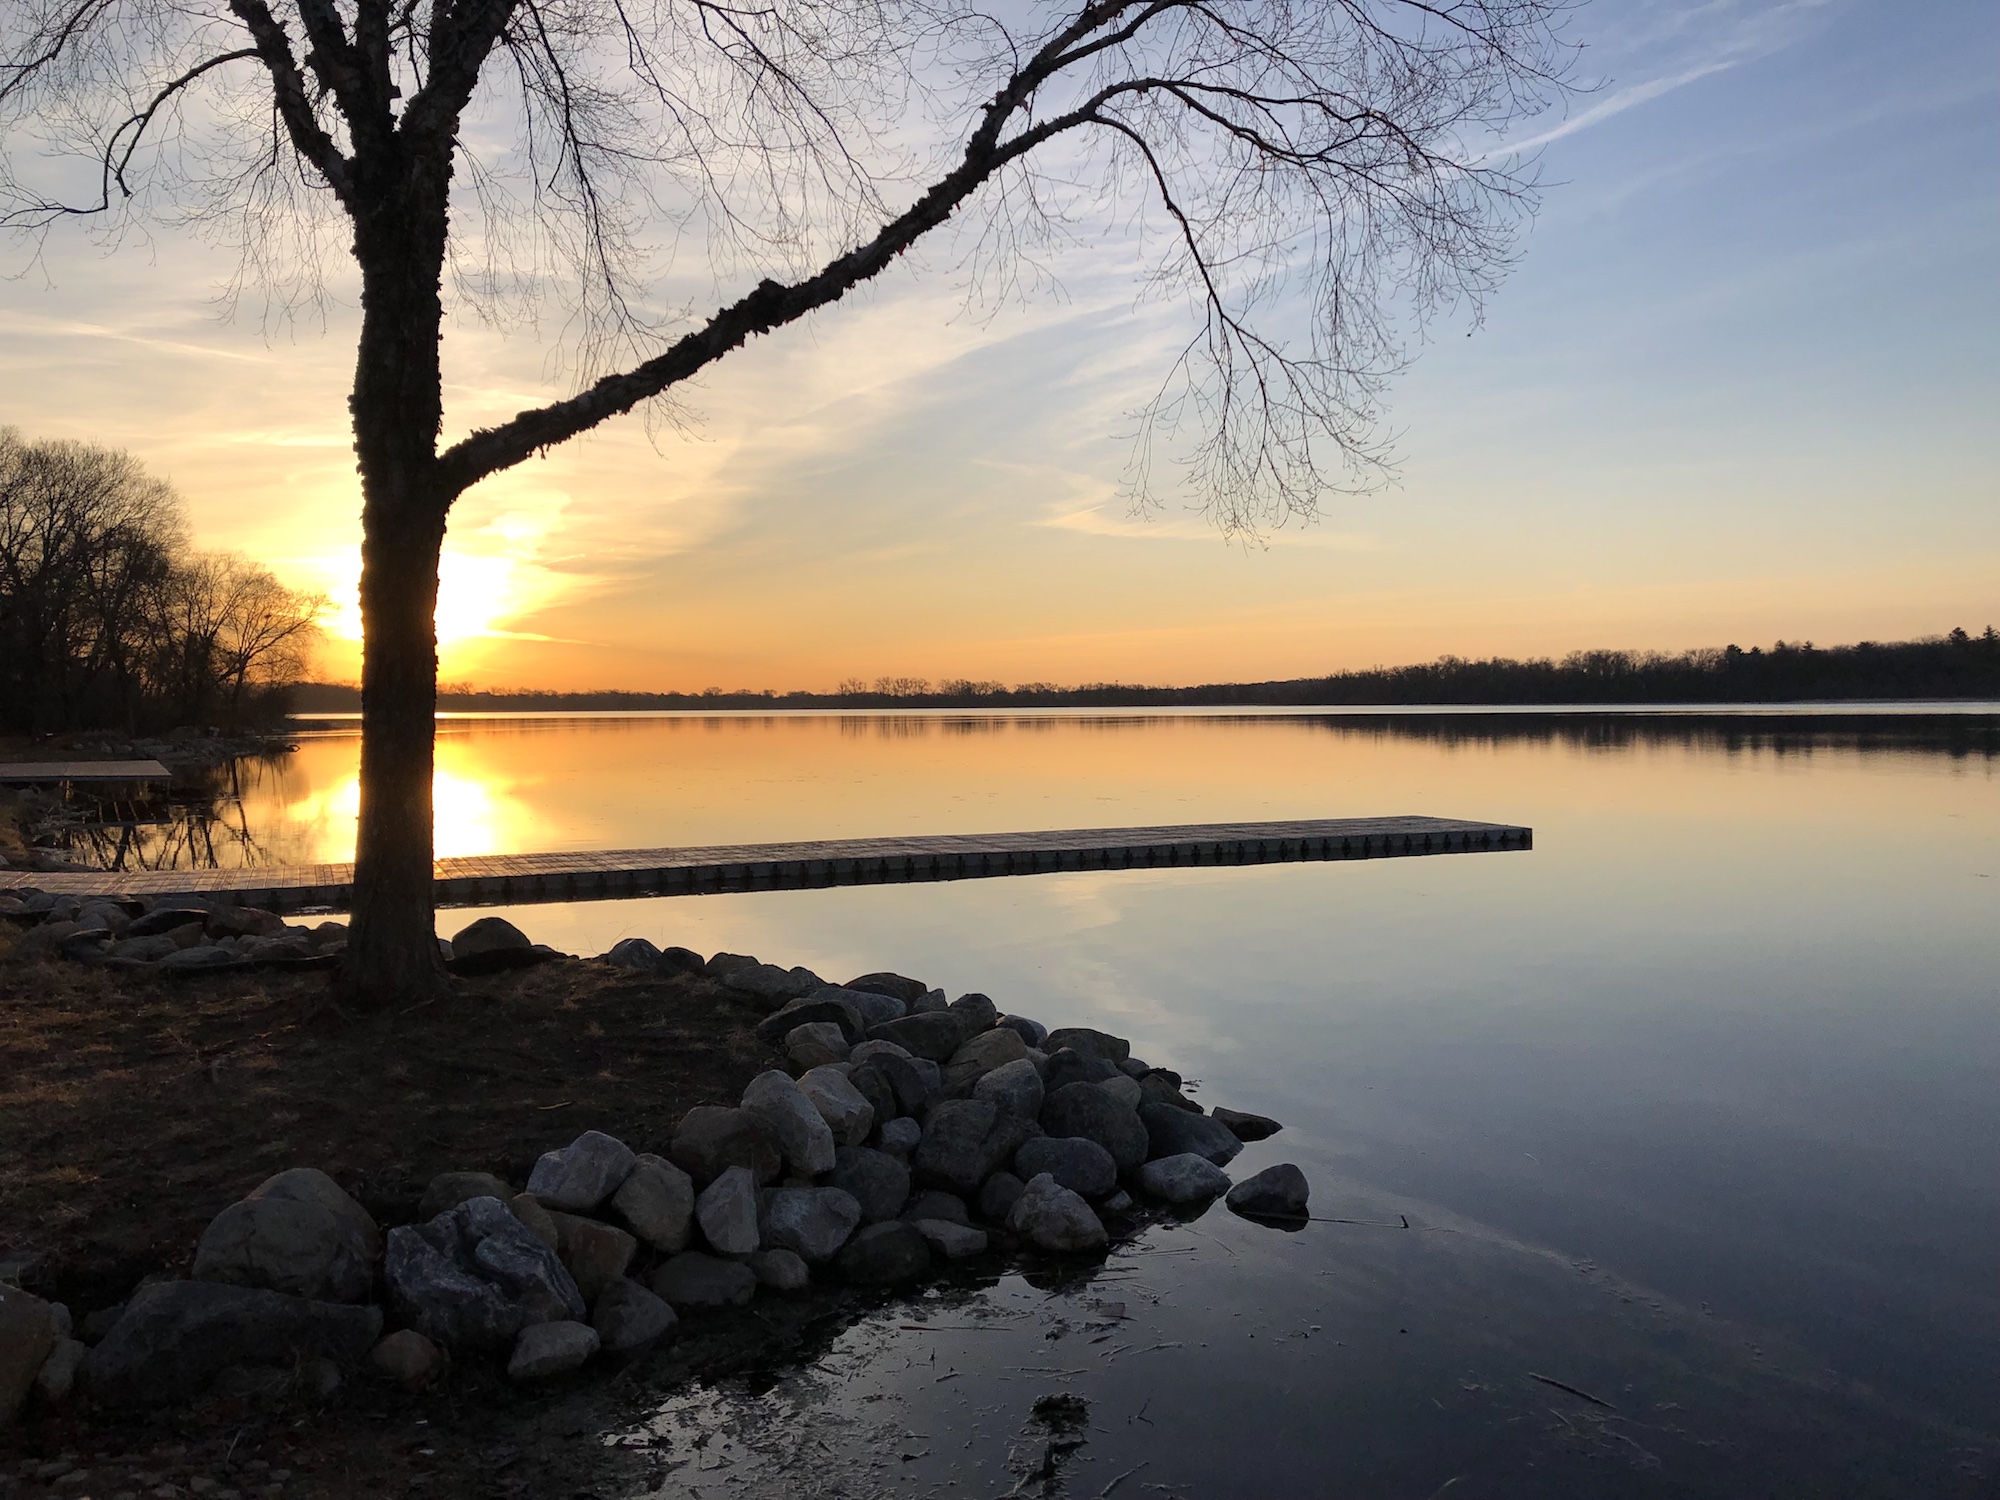 Lake Wingra on March 29, 2019.